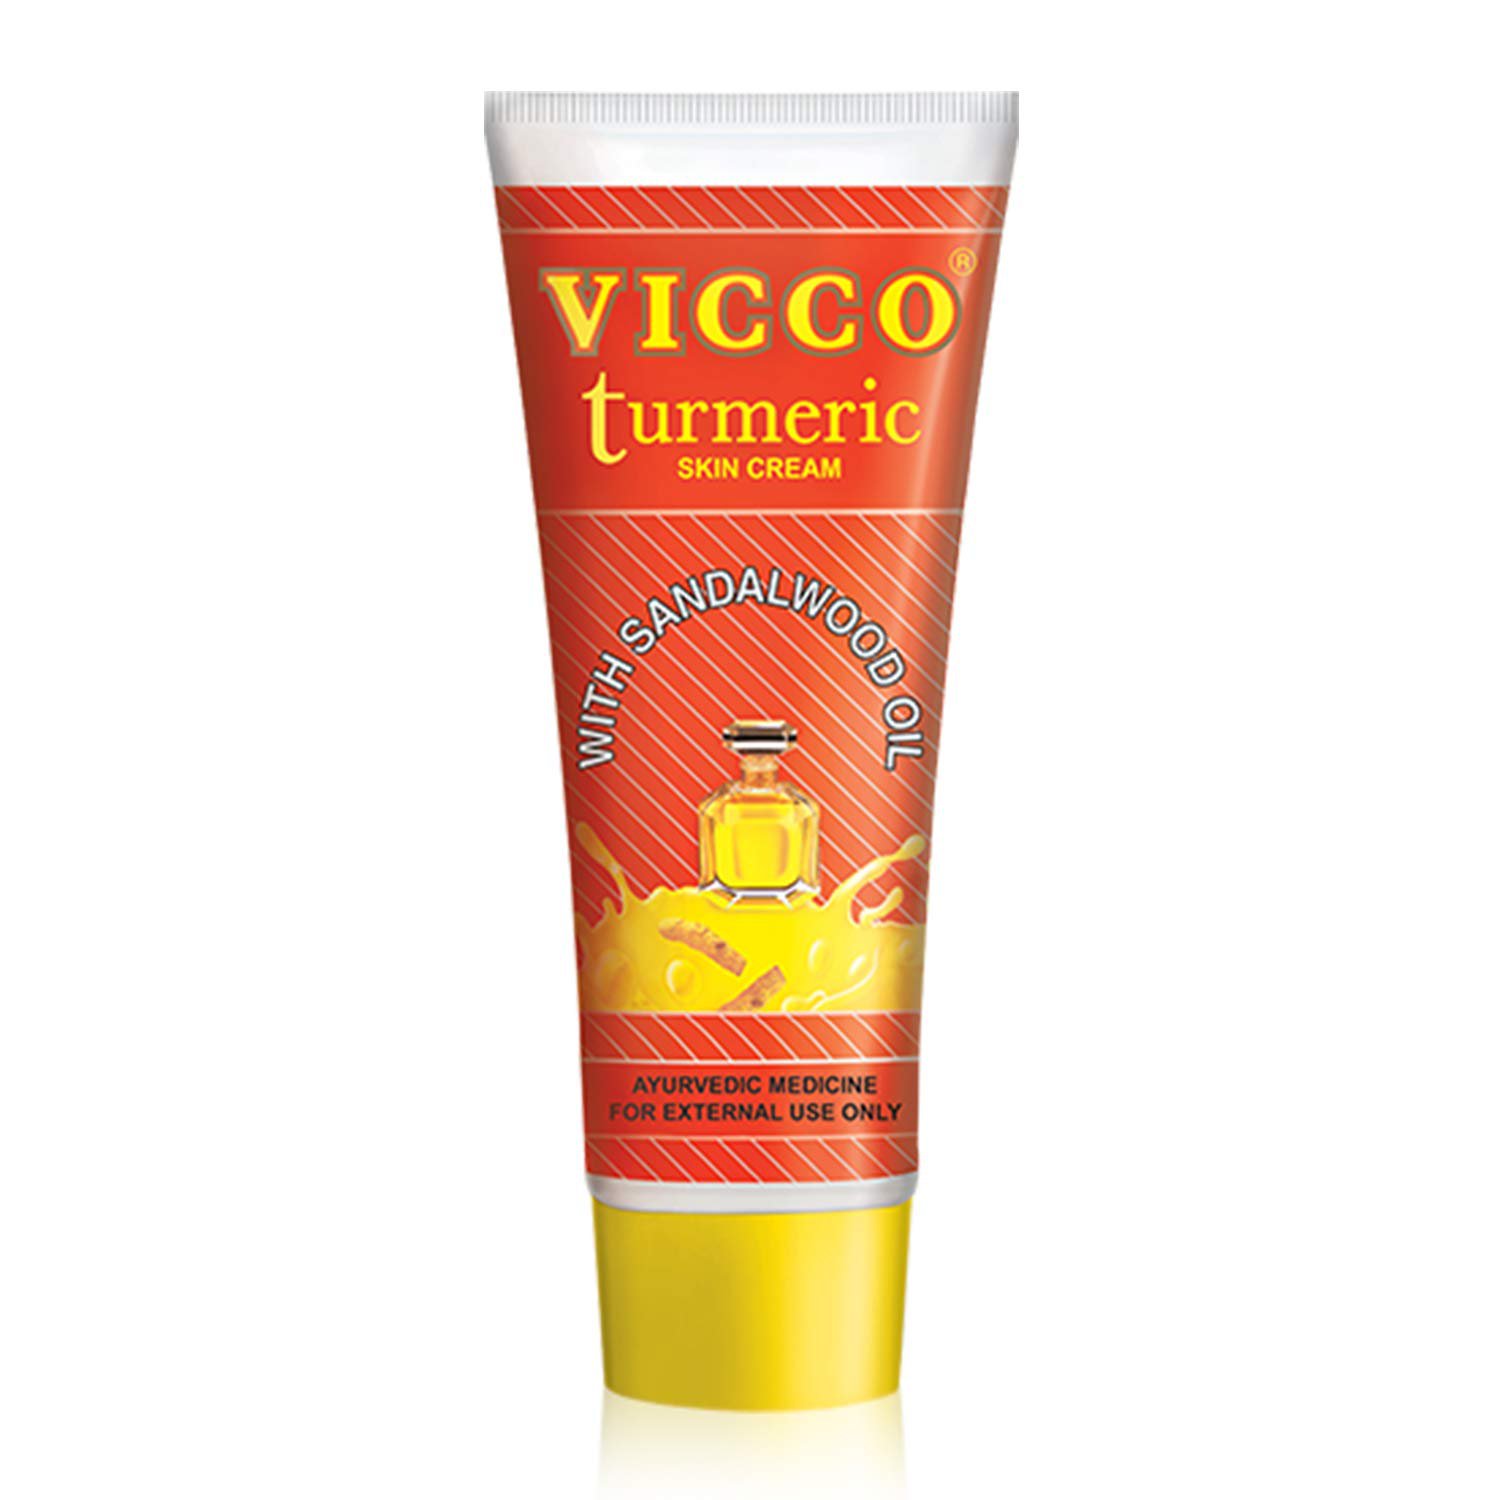 Vicco Turmeric Skin Cream 70 gm pack of 2